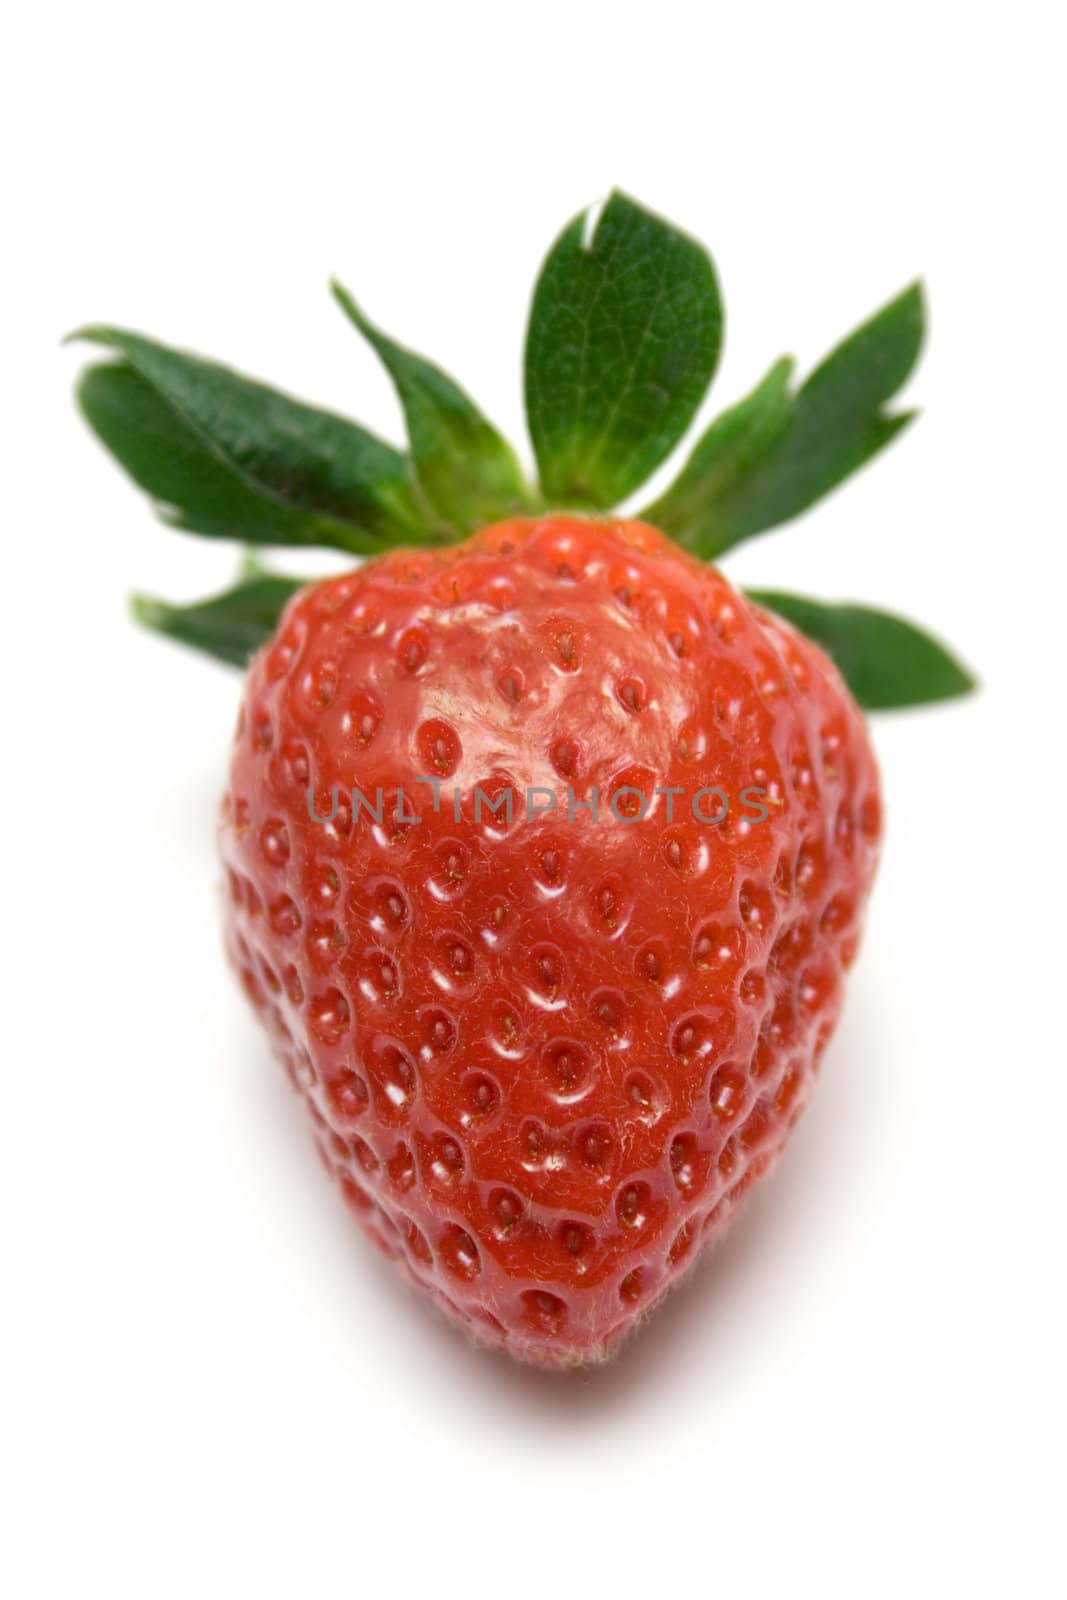 Ripened Strawberry by winterling